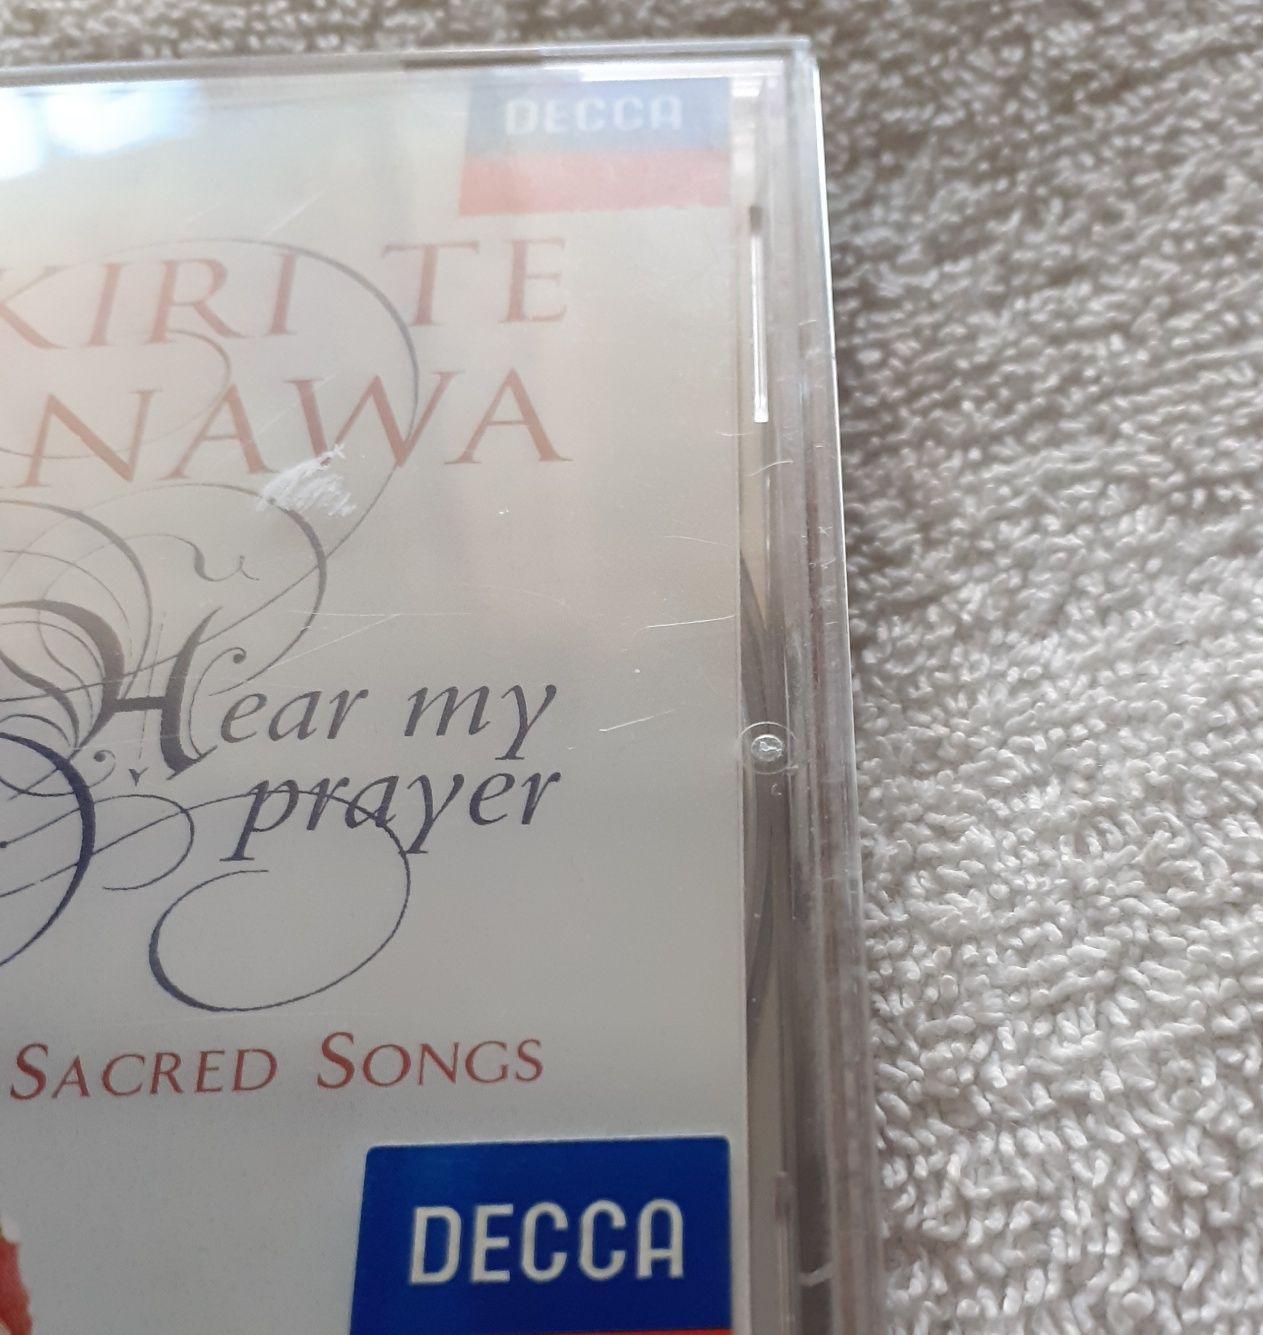 Kiri Te Kanawa ‎– Hear My Prayer - Sacred Songs (CD)(Muzyka Klasyczna)